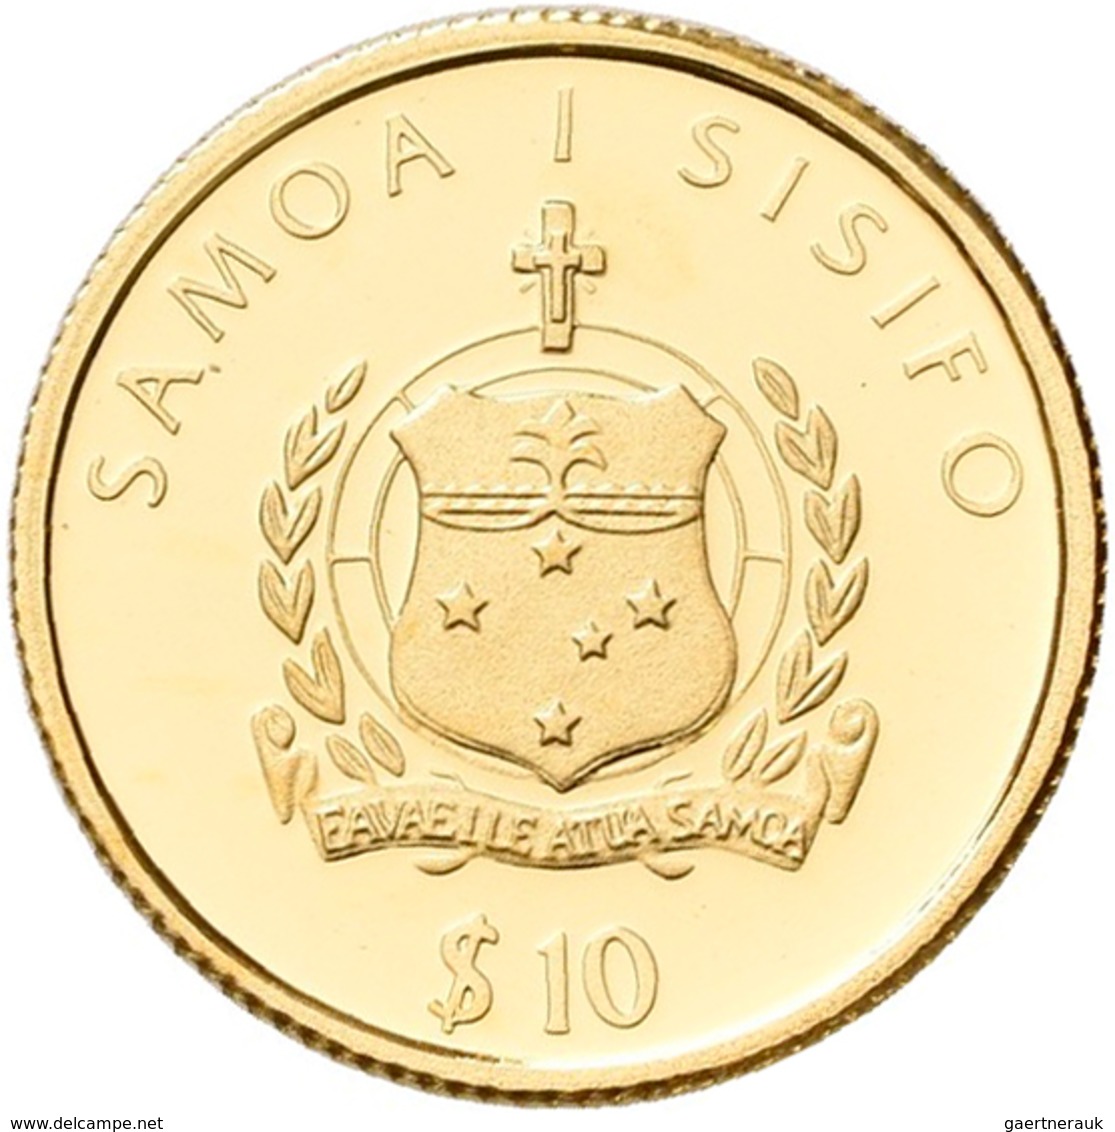 Samoa - Anlagegold: Samoa I Sisifo: 10 Dollars 2005, Papst Johannes Paul II. KM# 142. 1/25 OZ 999/10 - Samoa